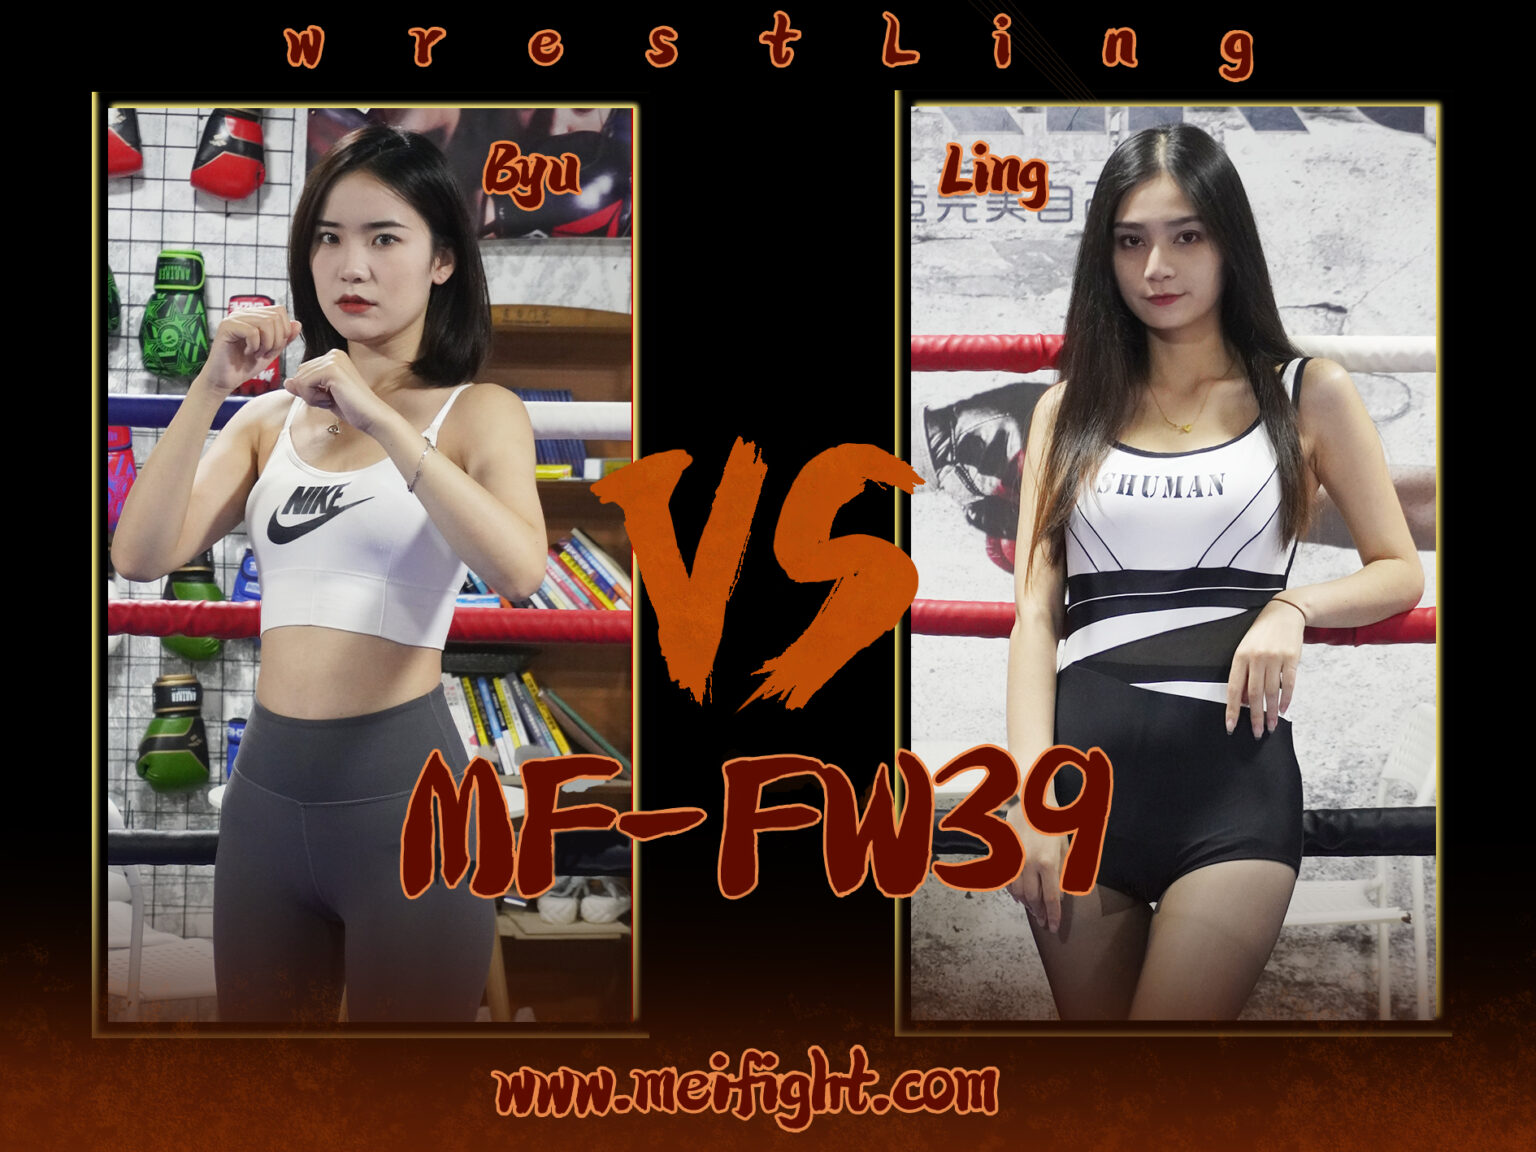 MF-FW39-Byu VS Ling